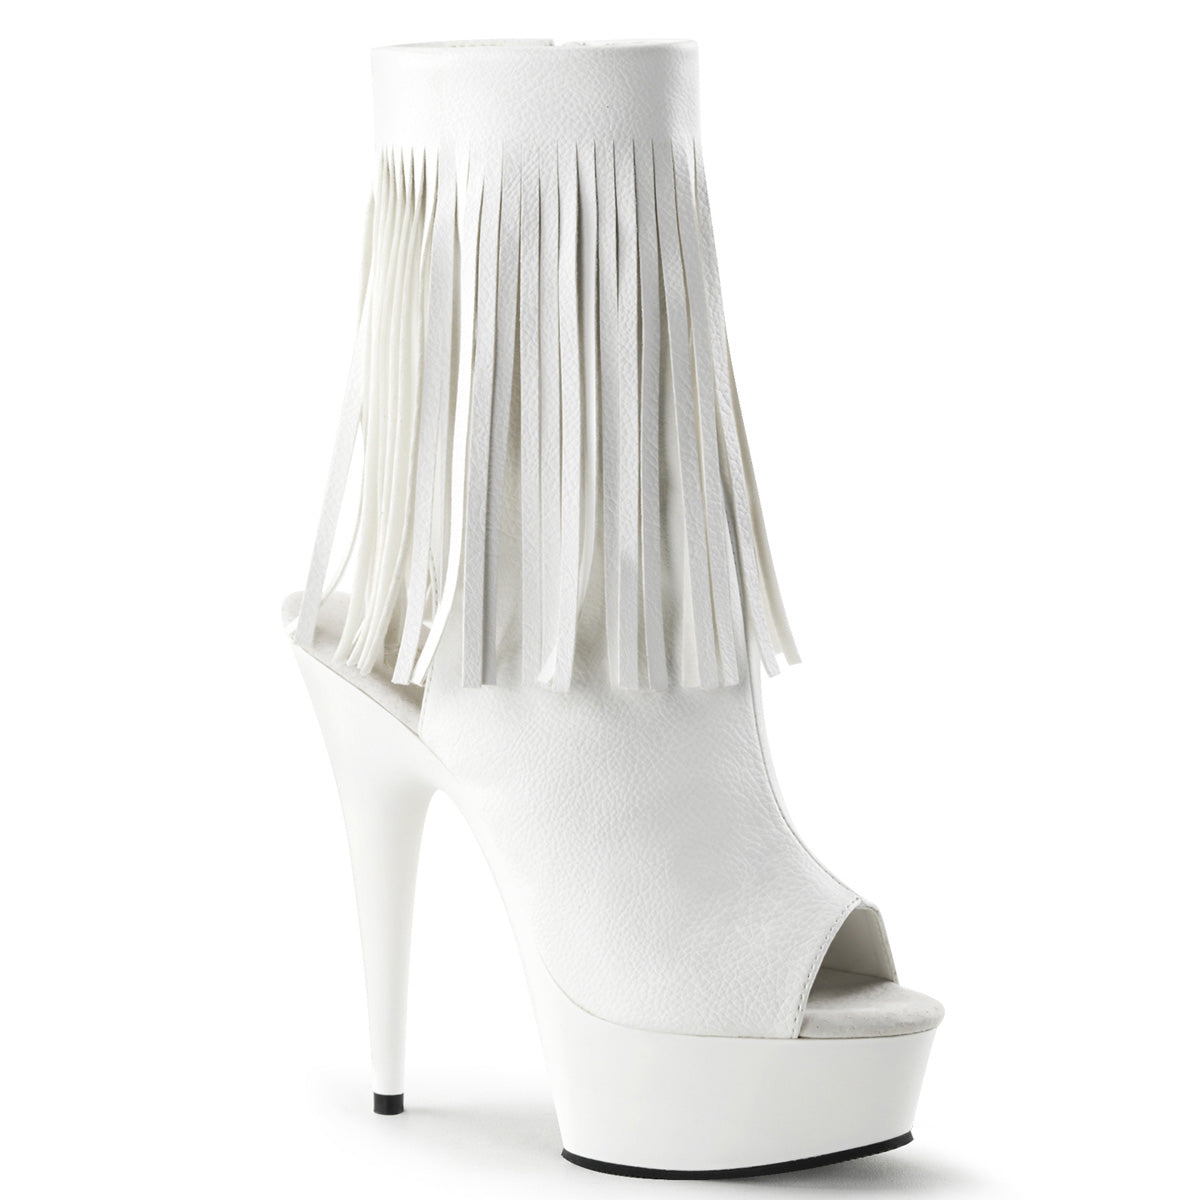 DELIGHT-1019 Pleasers 6 Inch Heel White Pole Dancer Platform Shoes